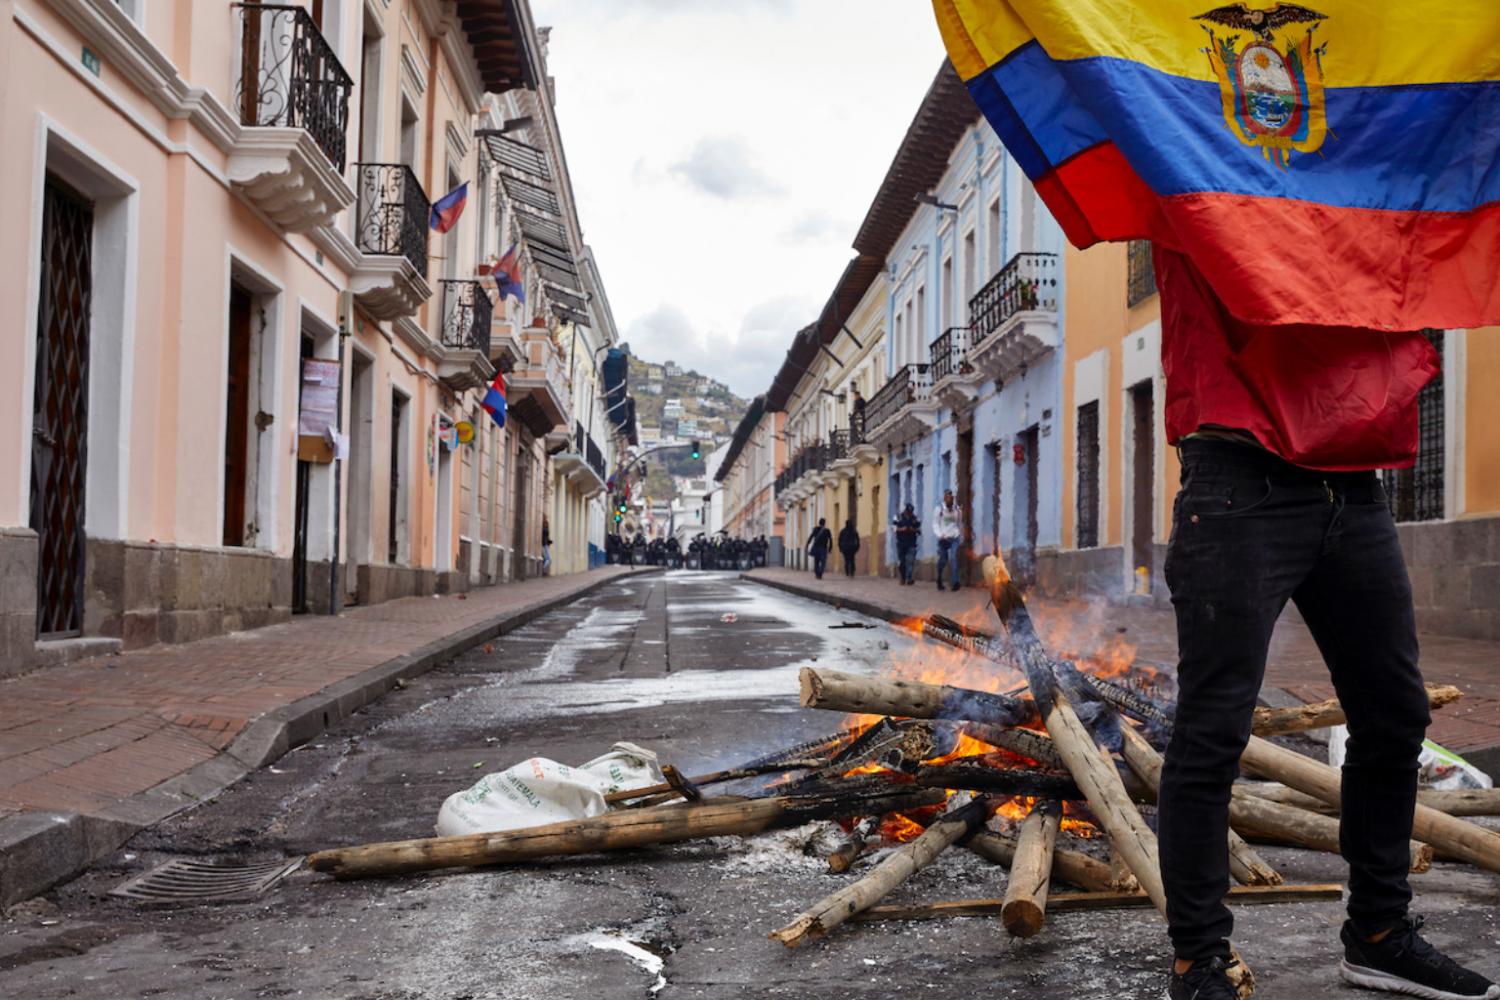 Paro Nacional en Ecuador: la receta noventera del FMI se repite